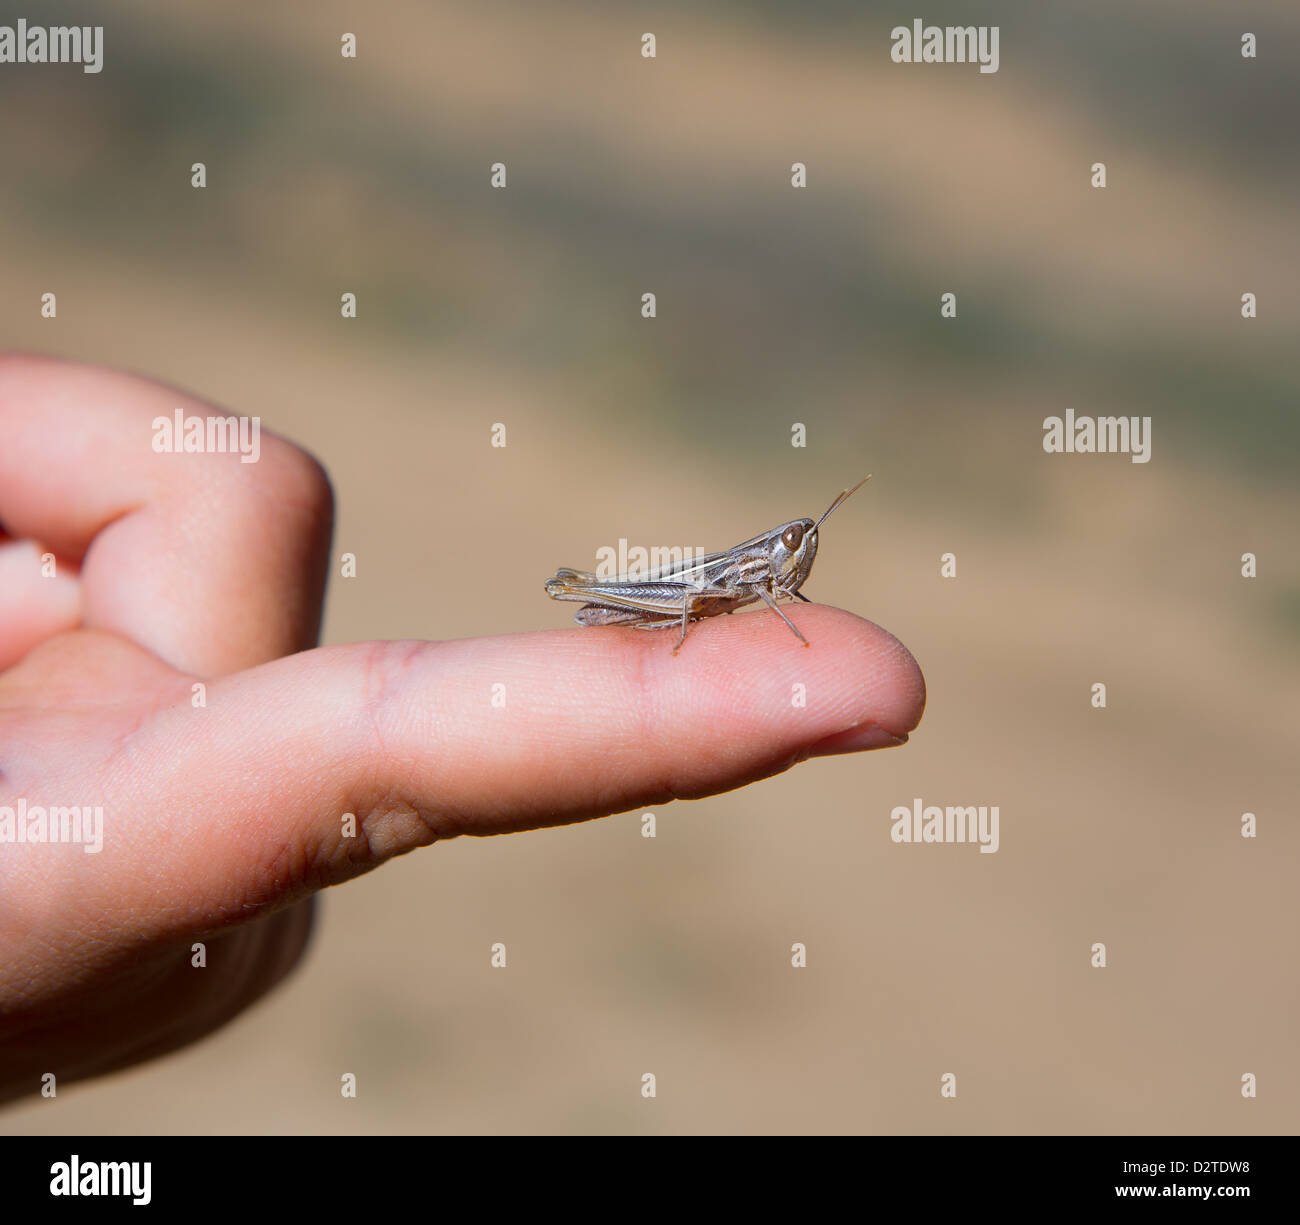 kid hand holding grasshopper bug macro detail Stock Photo